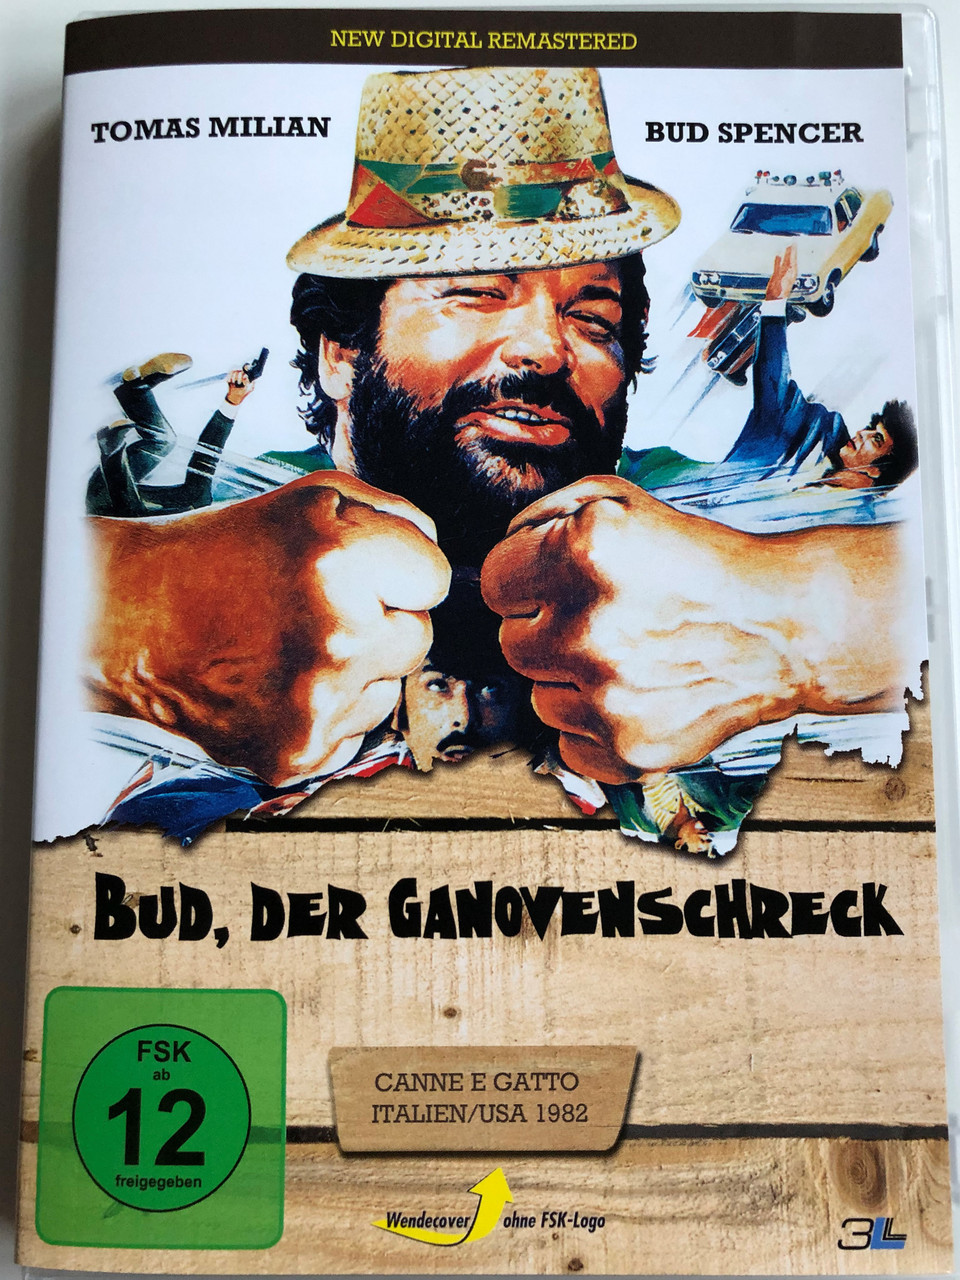 Bud, der Ganovenschreck DVD 1982 Cane e gatto AKA Cat and Dog / Directed by  Bruno Corbucci / Starring: Bud Spencer, Tomas Milian - bibleinmylanguage